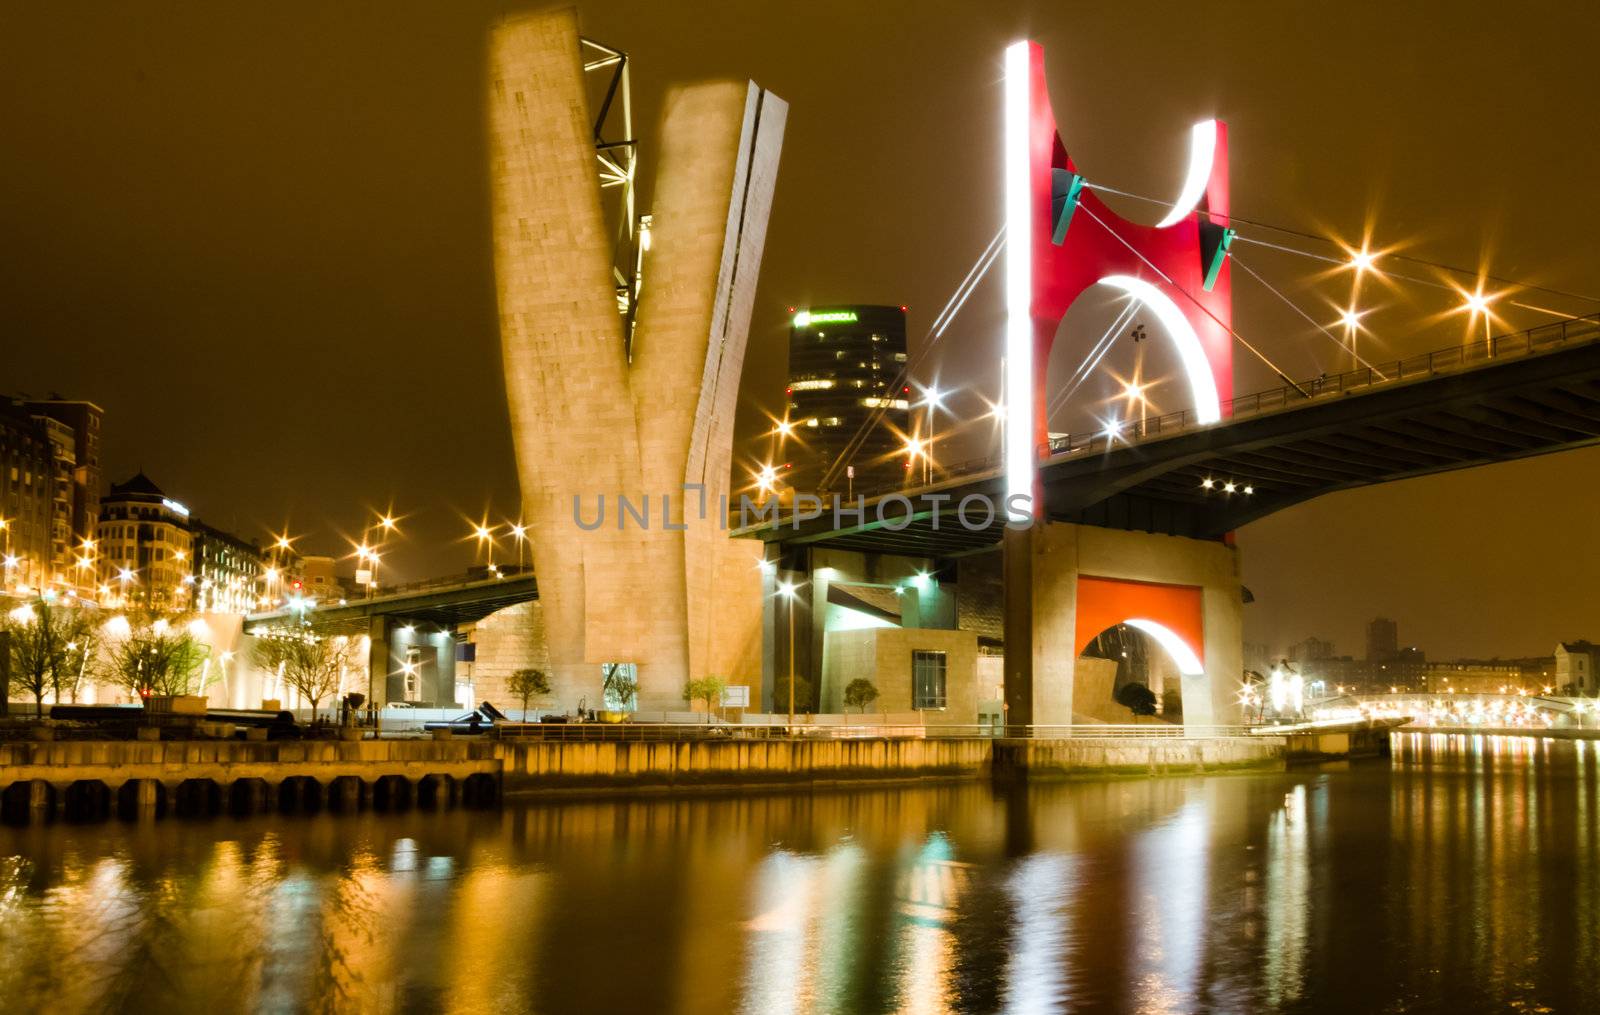 Nightview of Princes of Spain bridge, better known as La Salve bridge, over tne Nervión river in Bilbao, Spain. The commemorative red arc was designed by french artist Daniel Buren in 2007